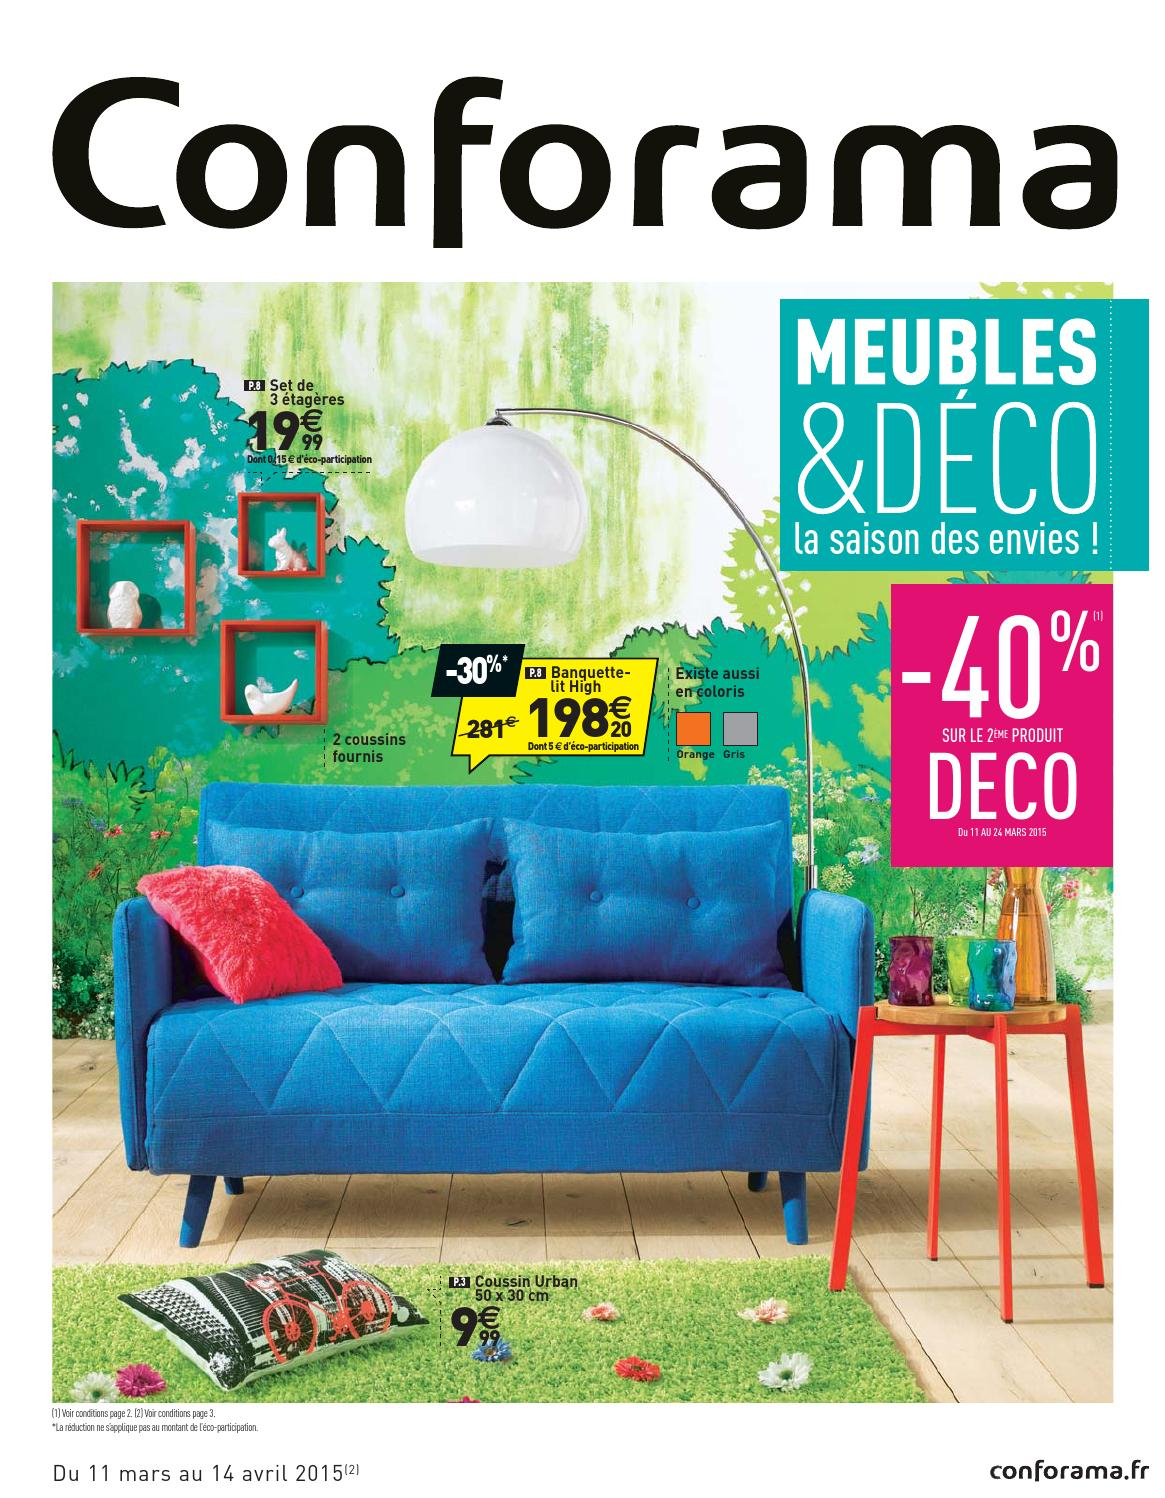 Conforama Catalogue 11Mars 14Avril2015 By Promocatalogues ... avec Lit Greg Conforama